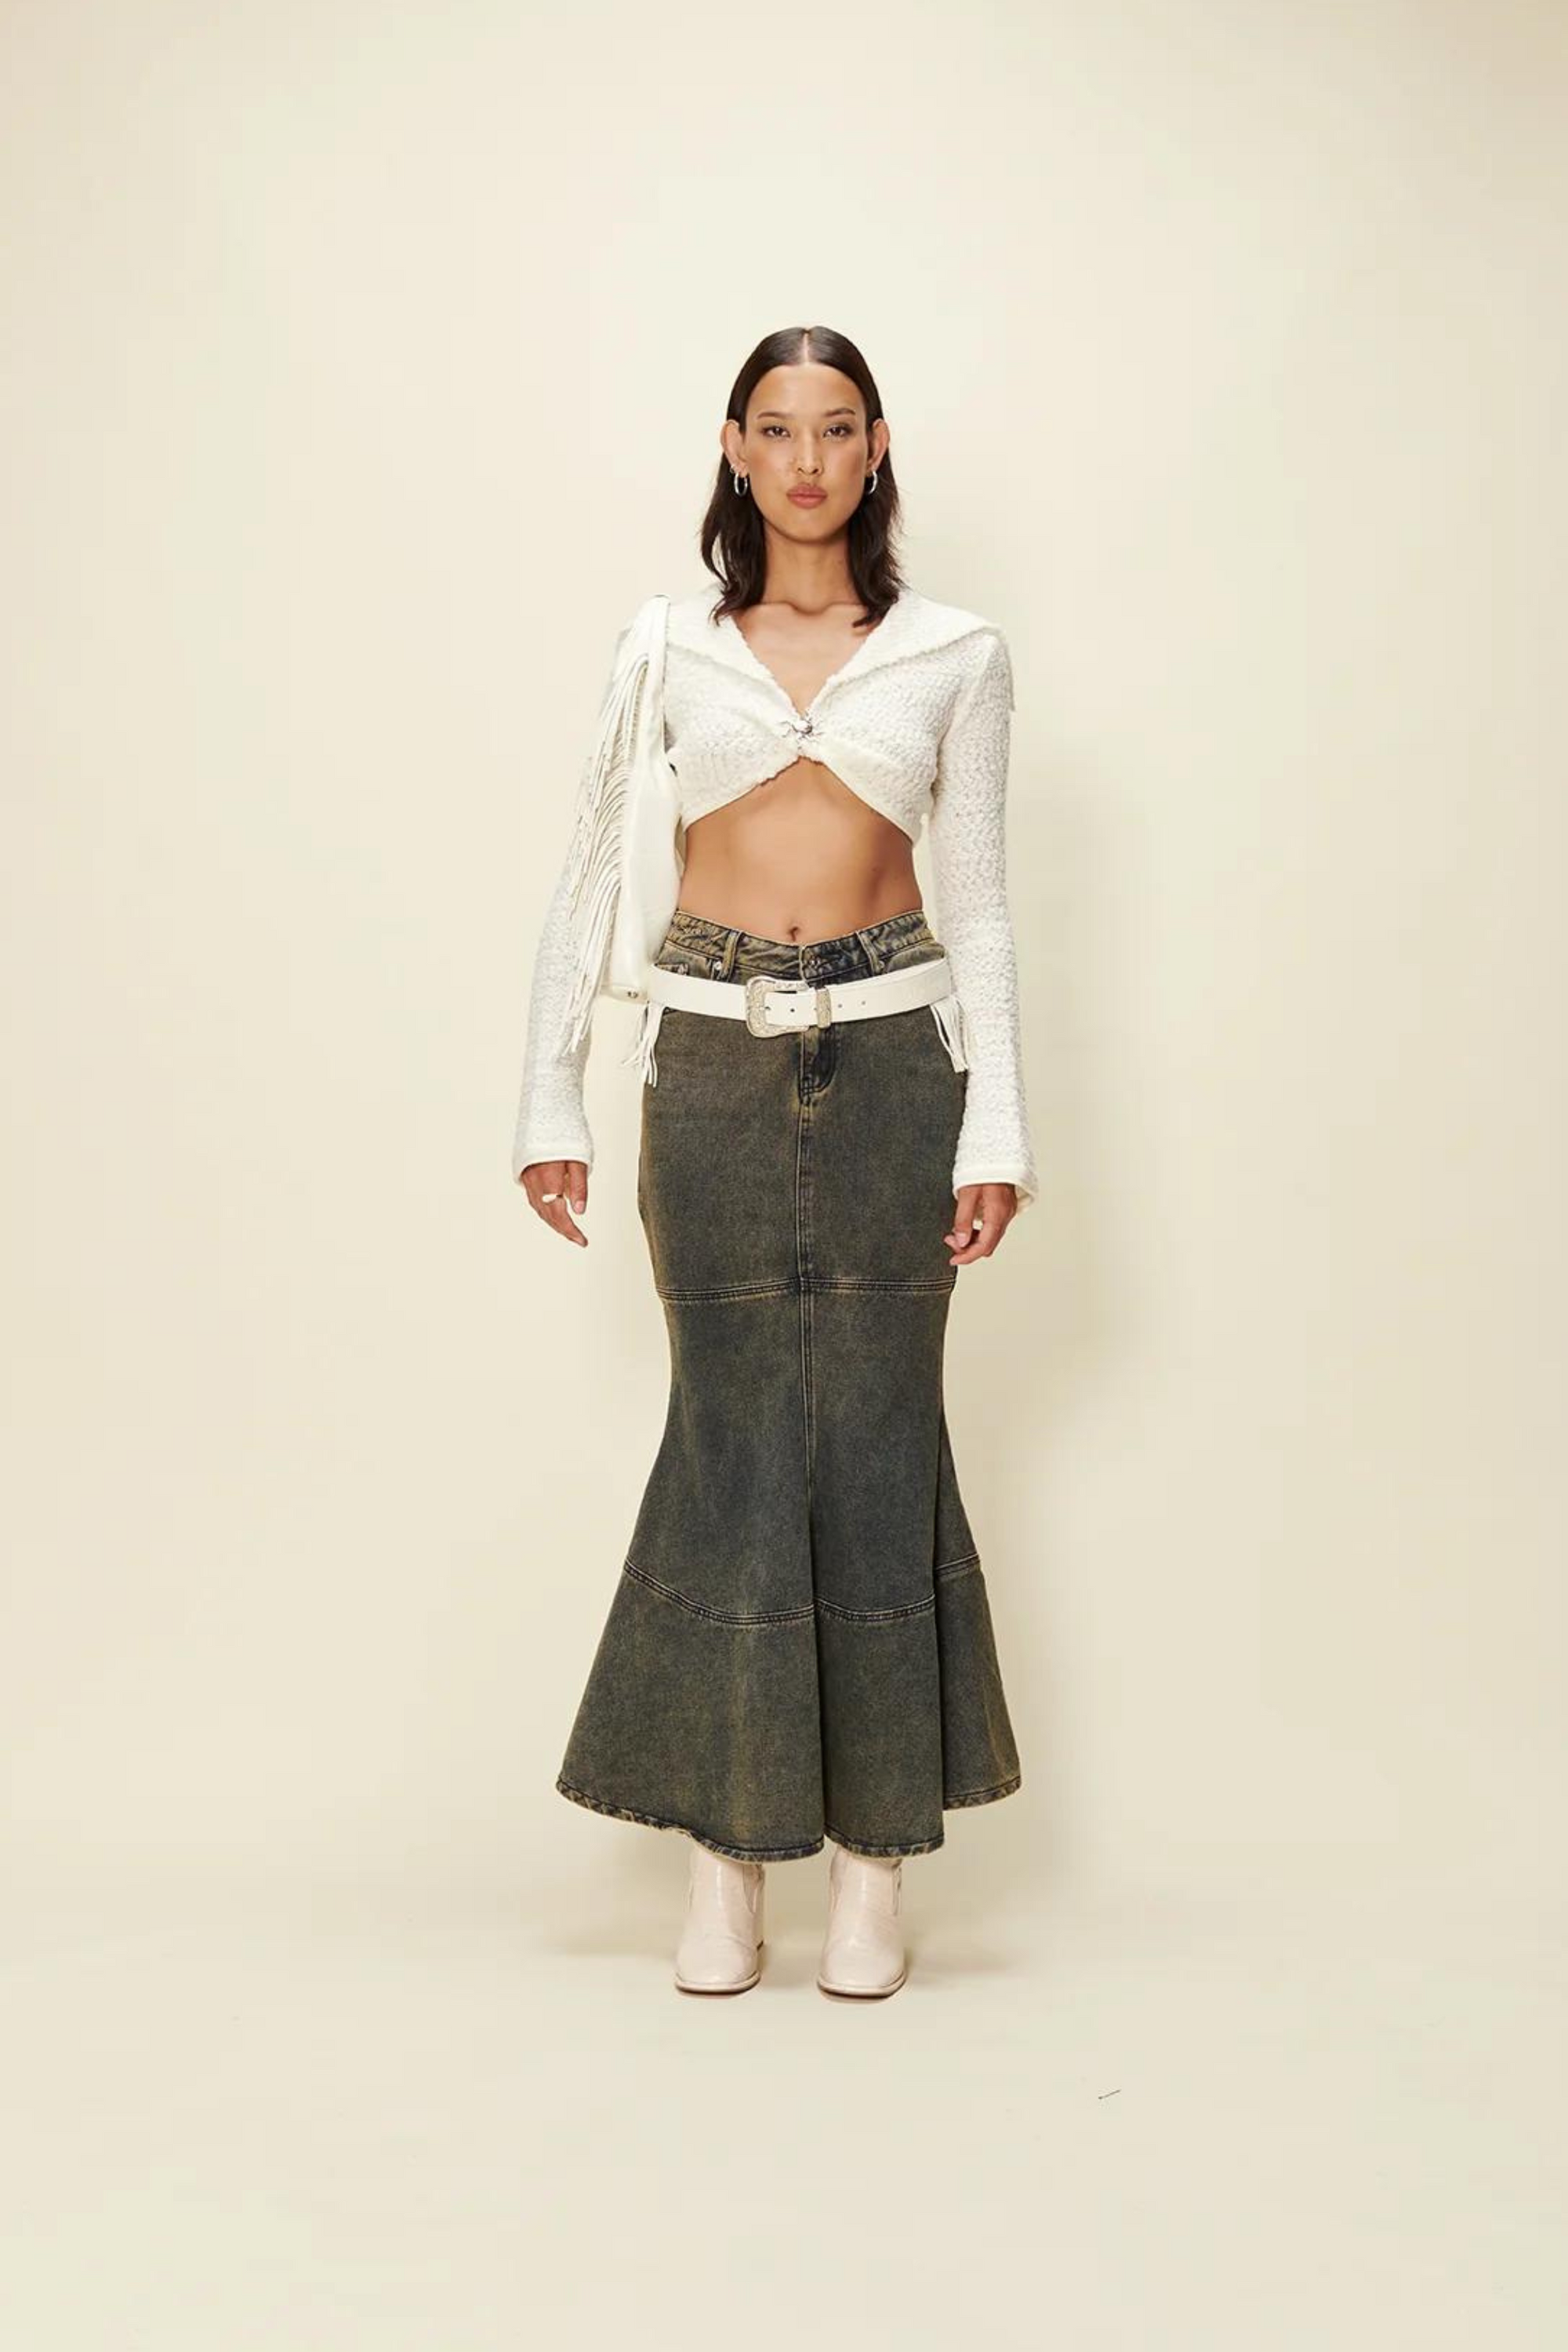 Lauralee Benjamin HO Couture Panty Brief [Pride Collection] XL